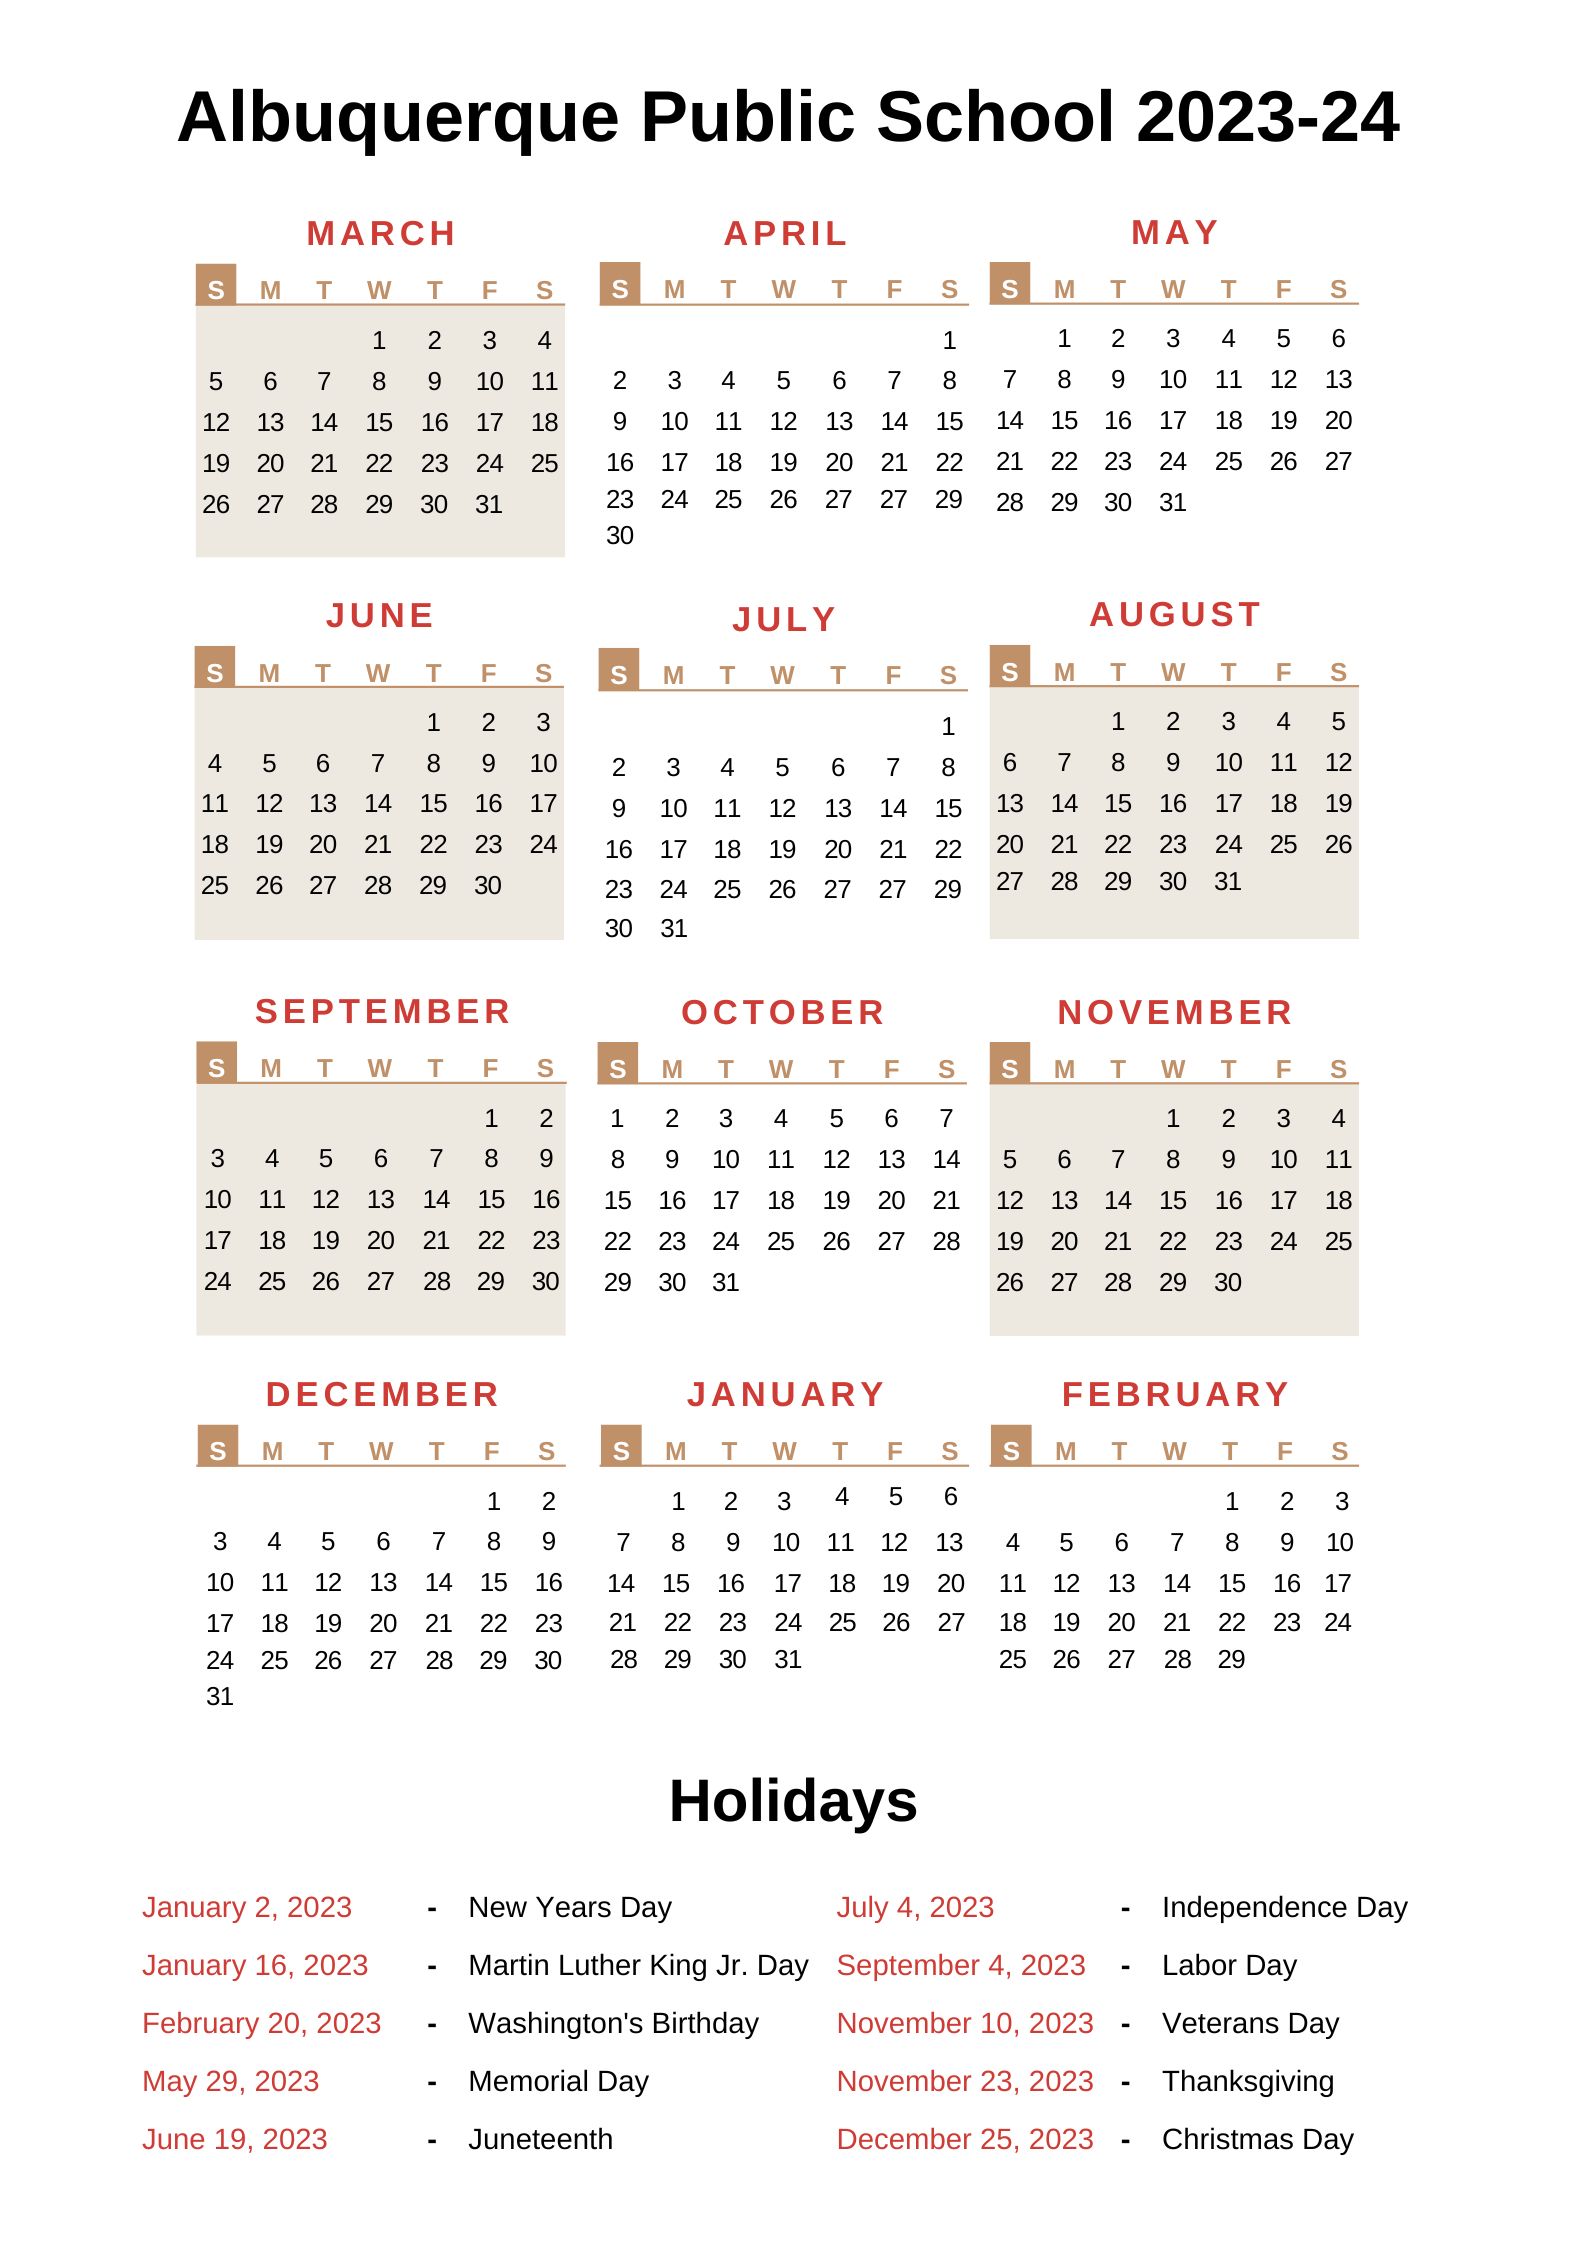 albuquerque-public-schools-calendar-aps-2023-24-with-holidays